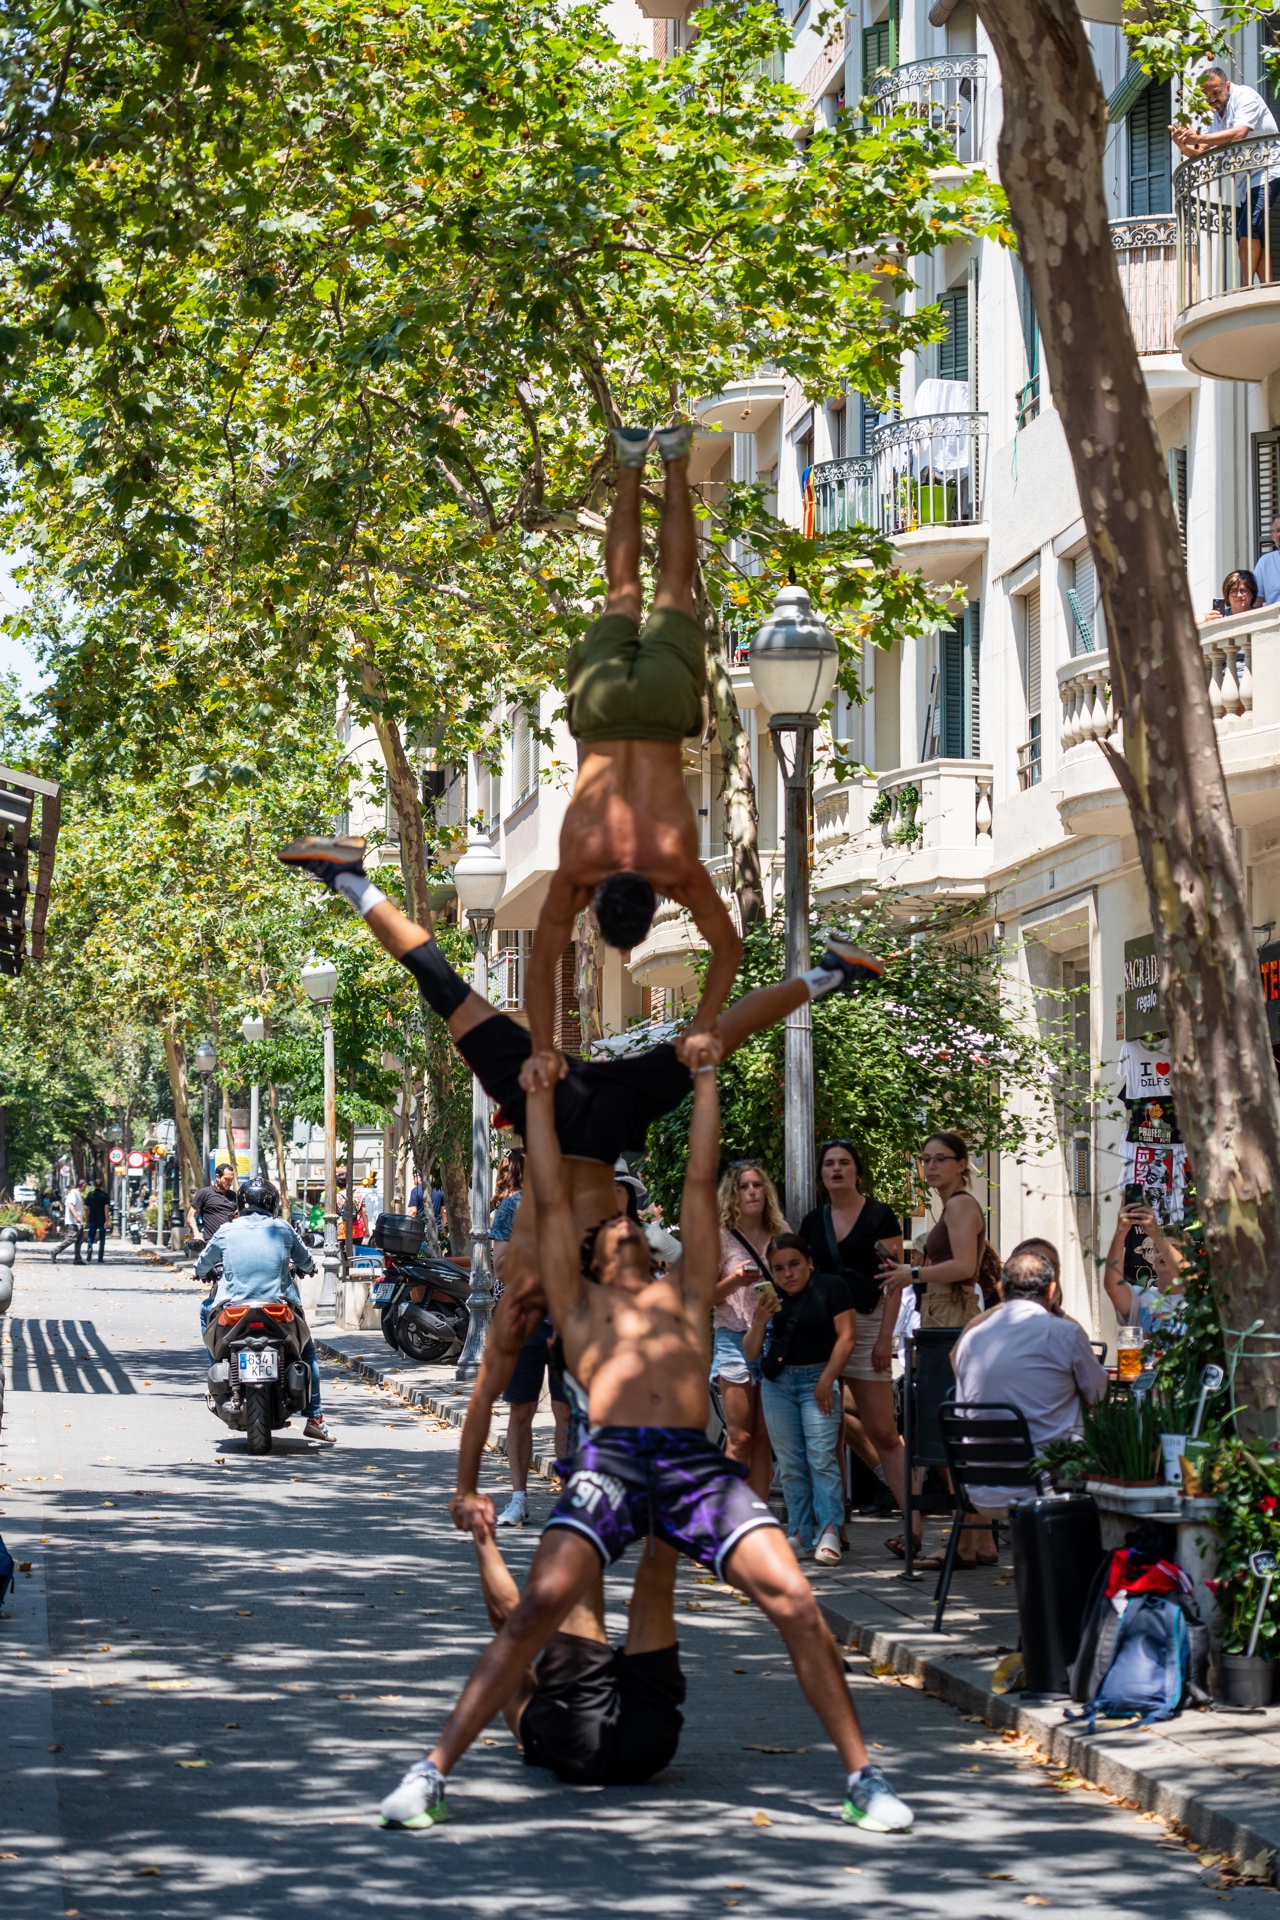 Male street dancers performing gravity defying tricks near Sagrada Familia in Barcelona, Spain